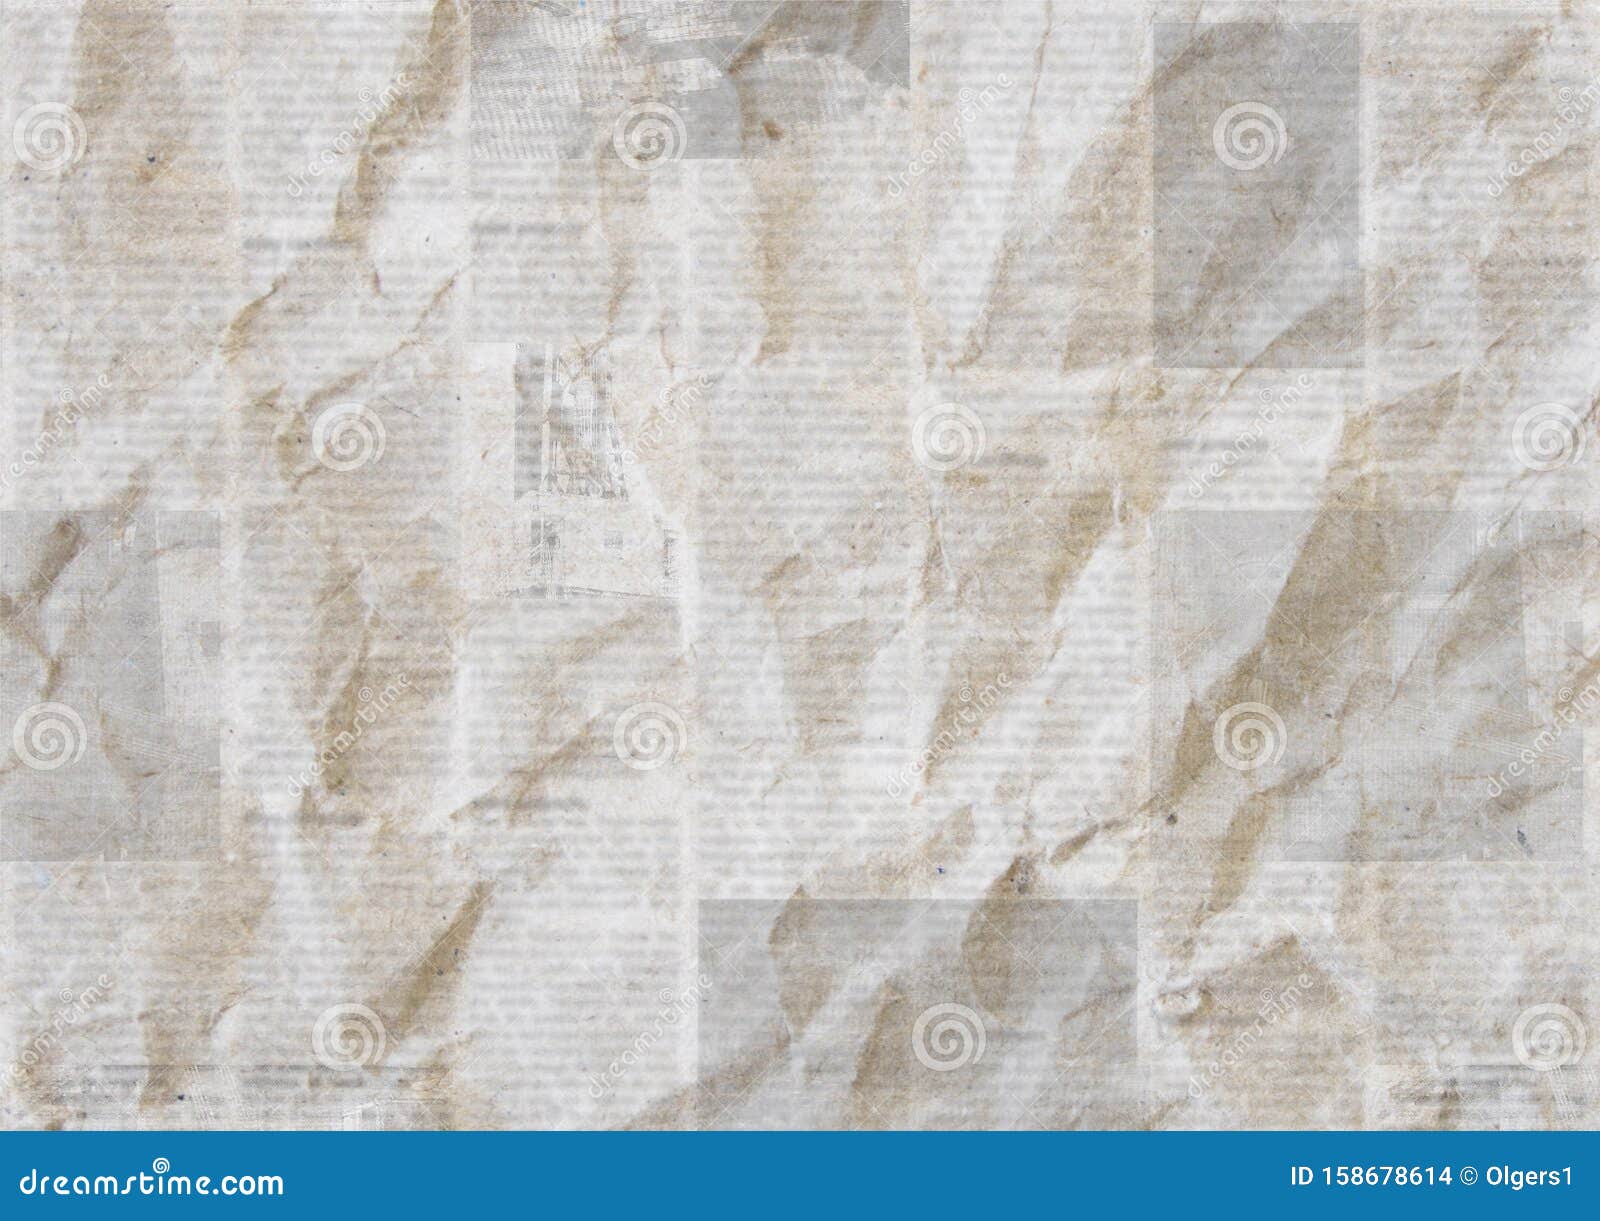 Old newspaper paper grunge texture background. Blurred vintage